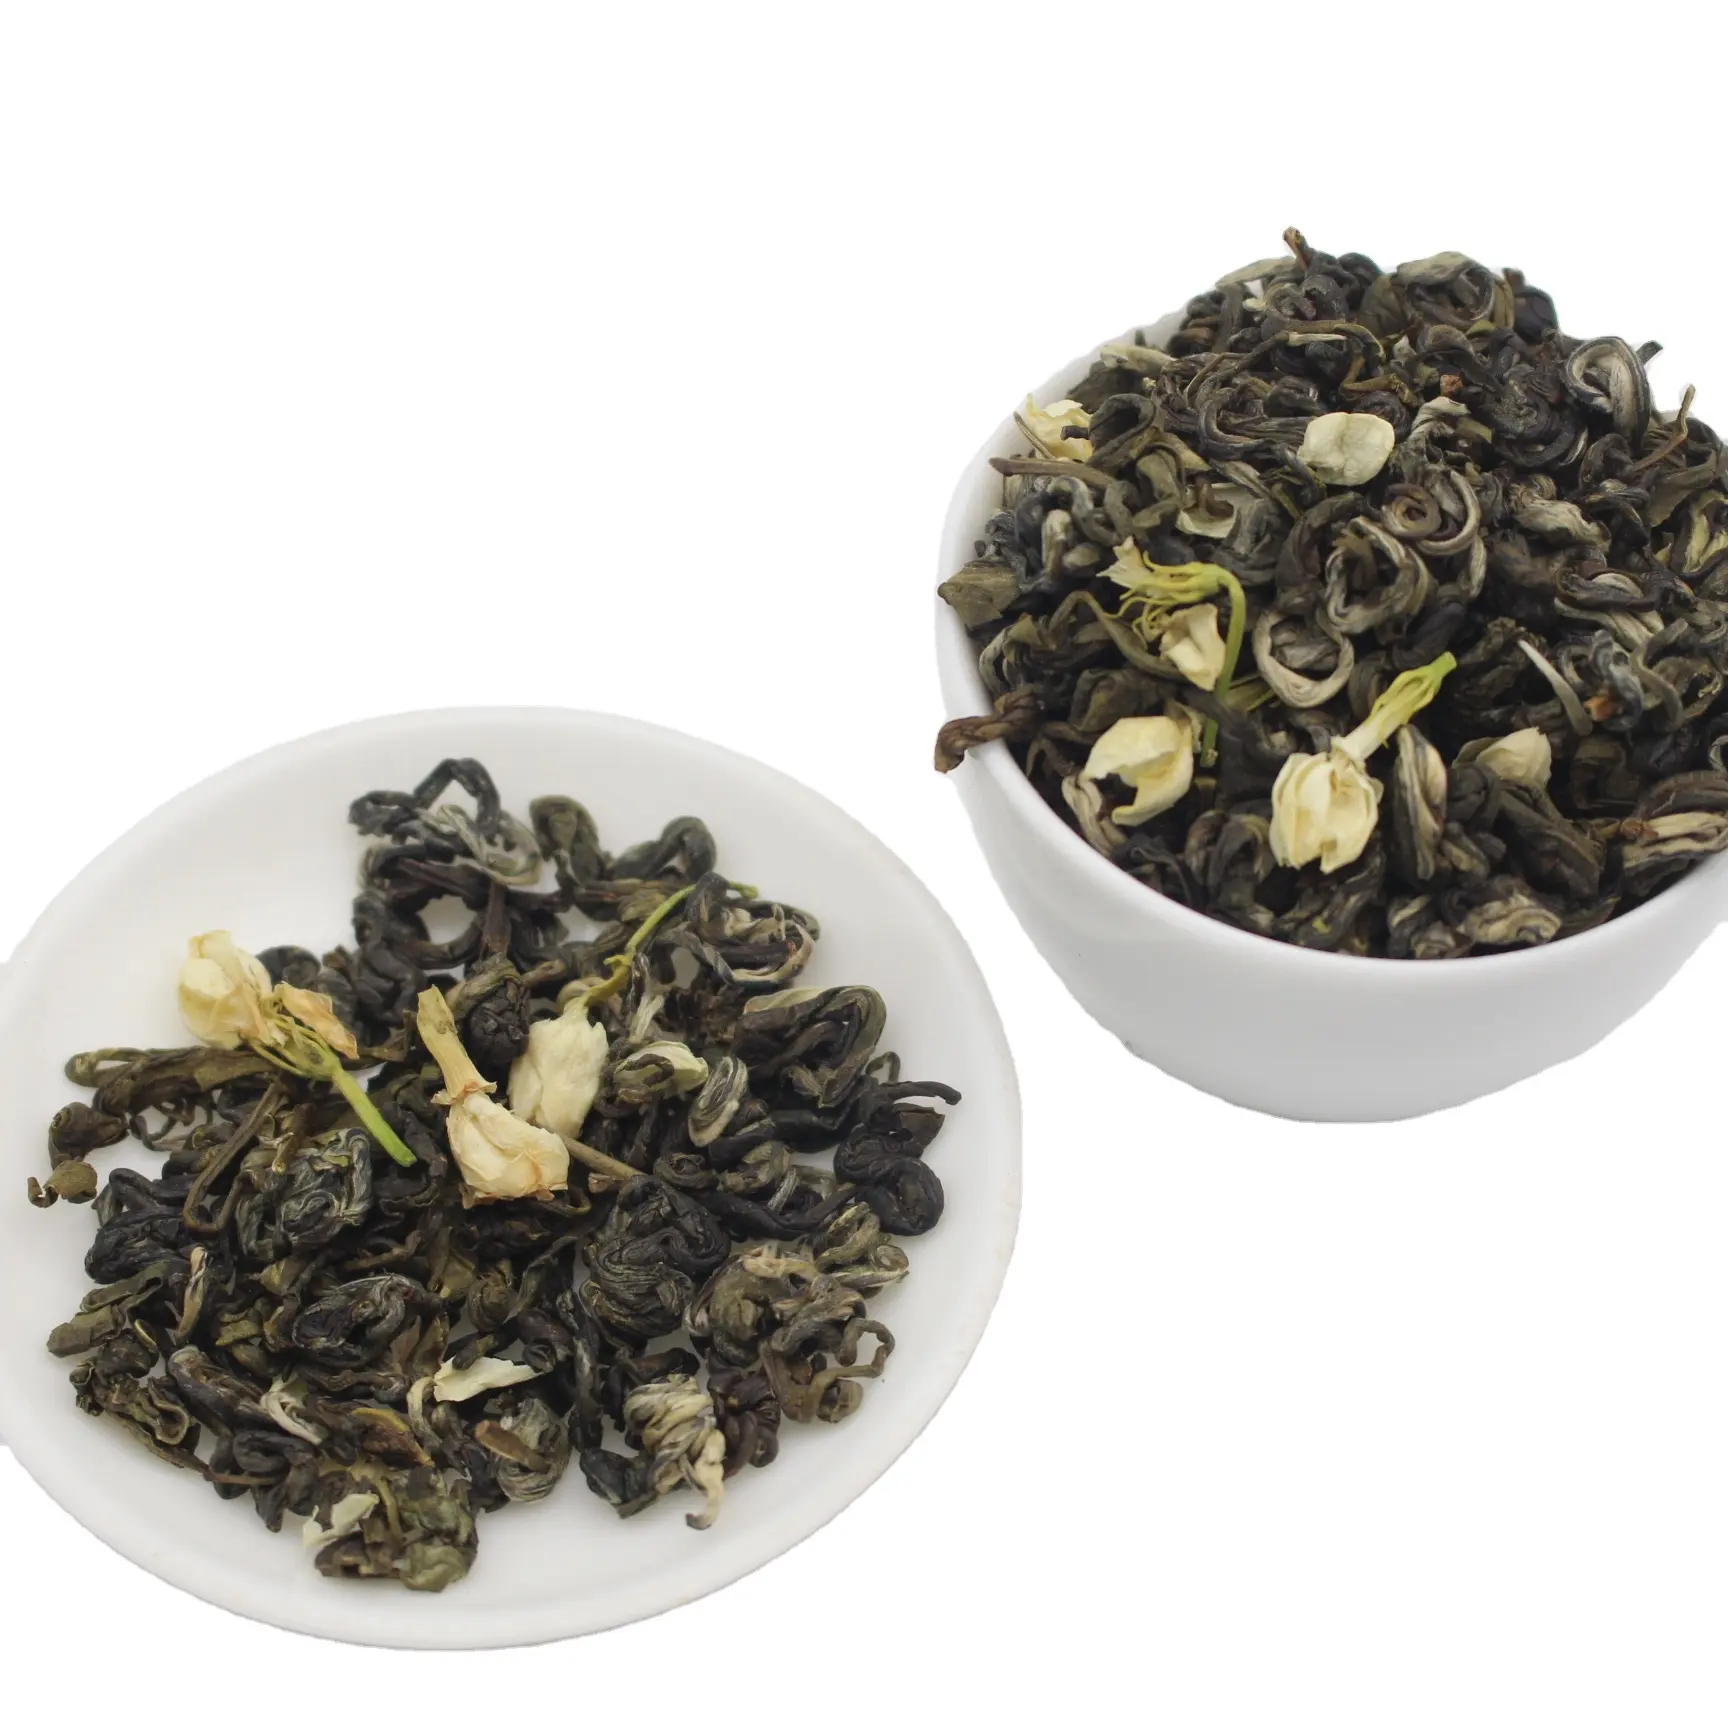 Jasmine Green Tea Bag Ingredients With HACCP Certification For Making Bubble Teas Jasmine Tea